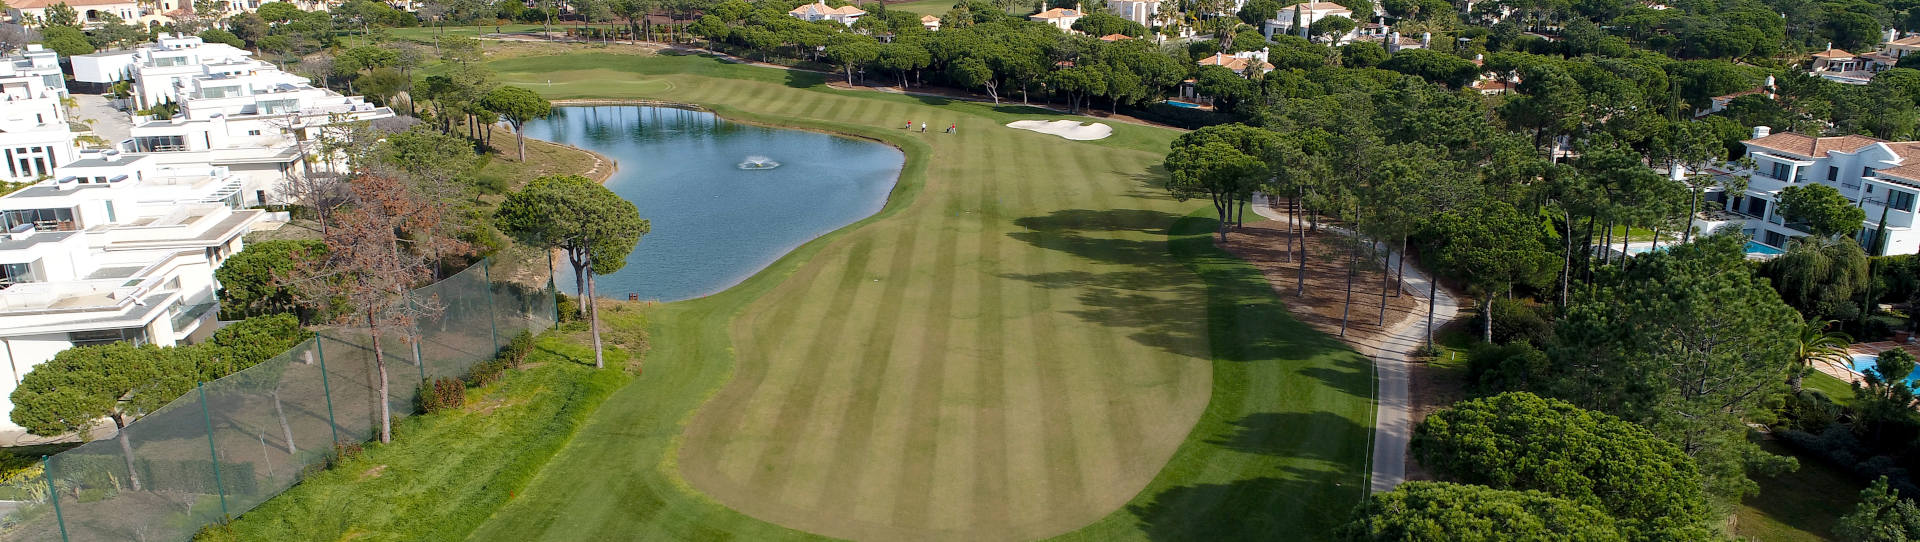 Portugal golf courses - Quinta do Lago North - Photo 3